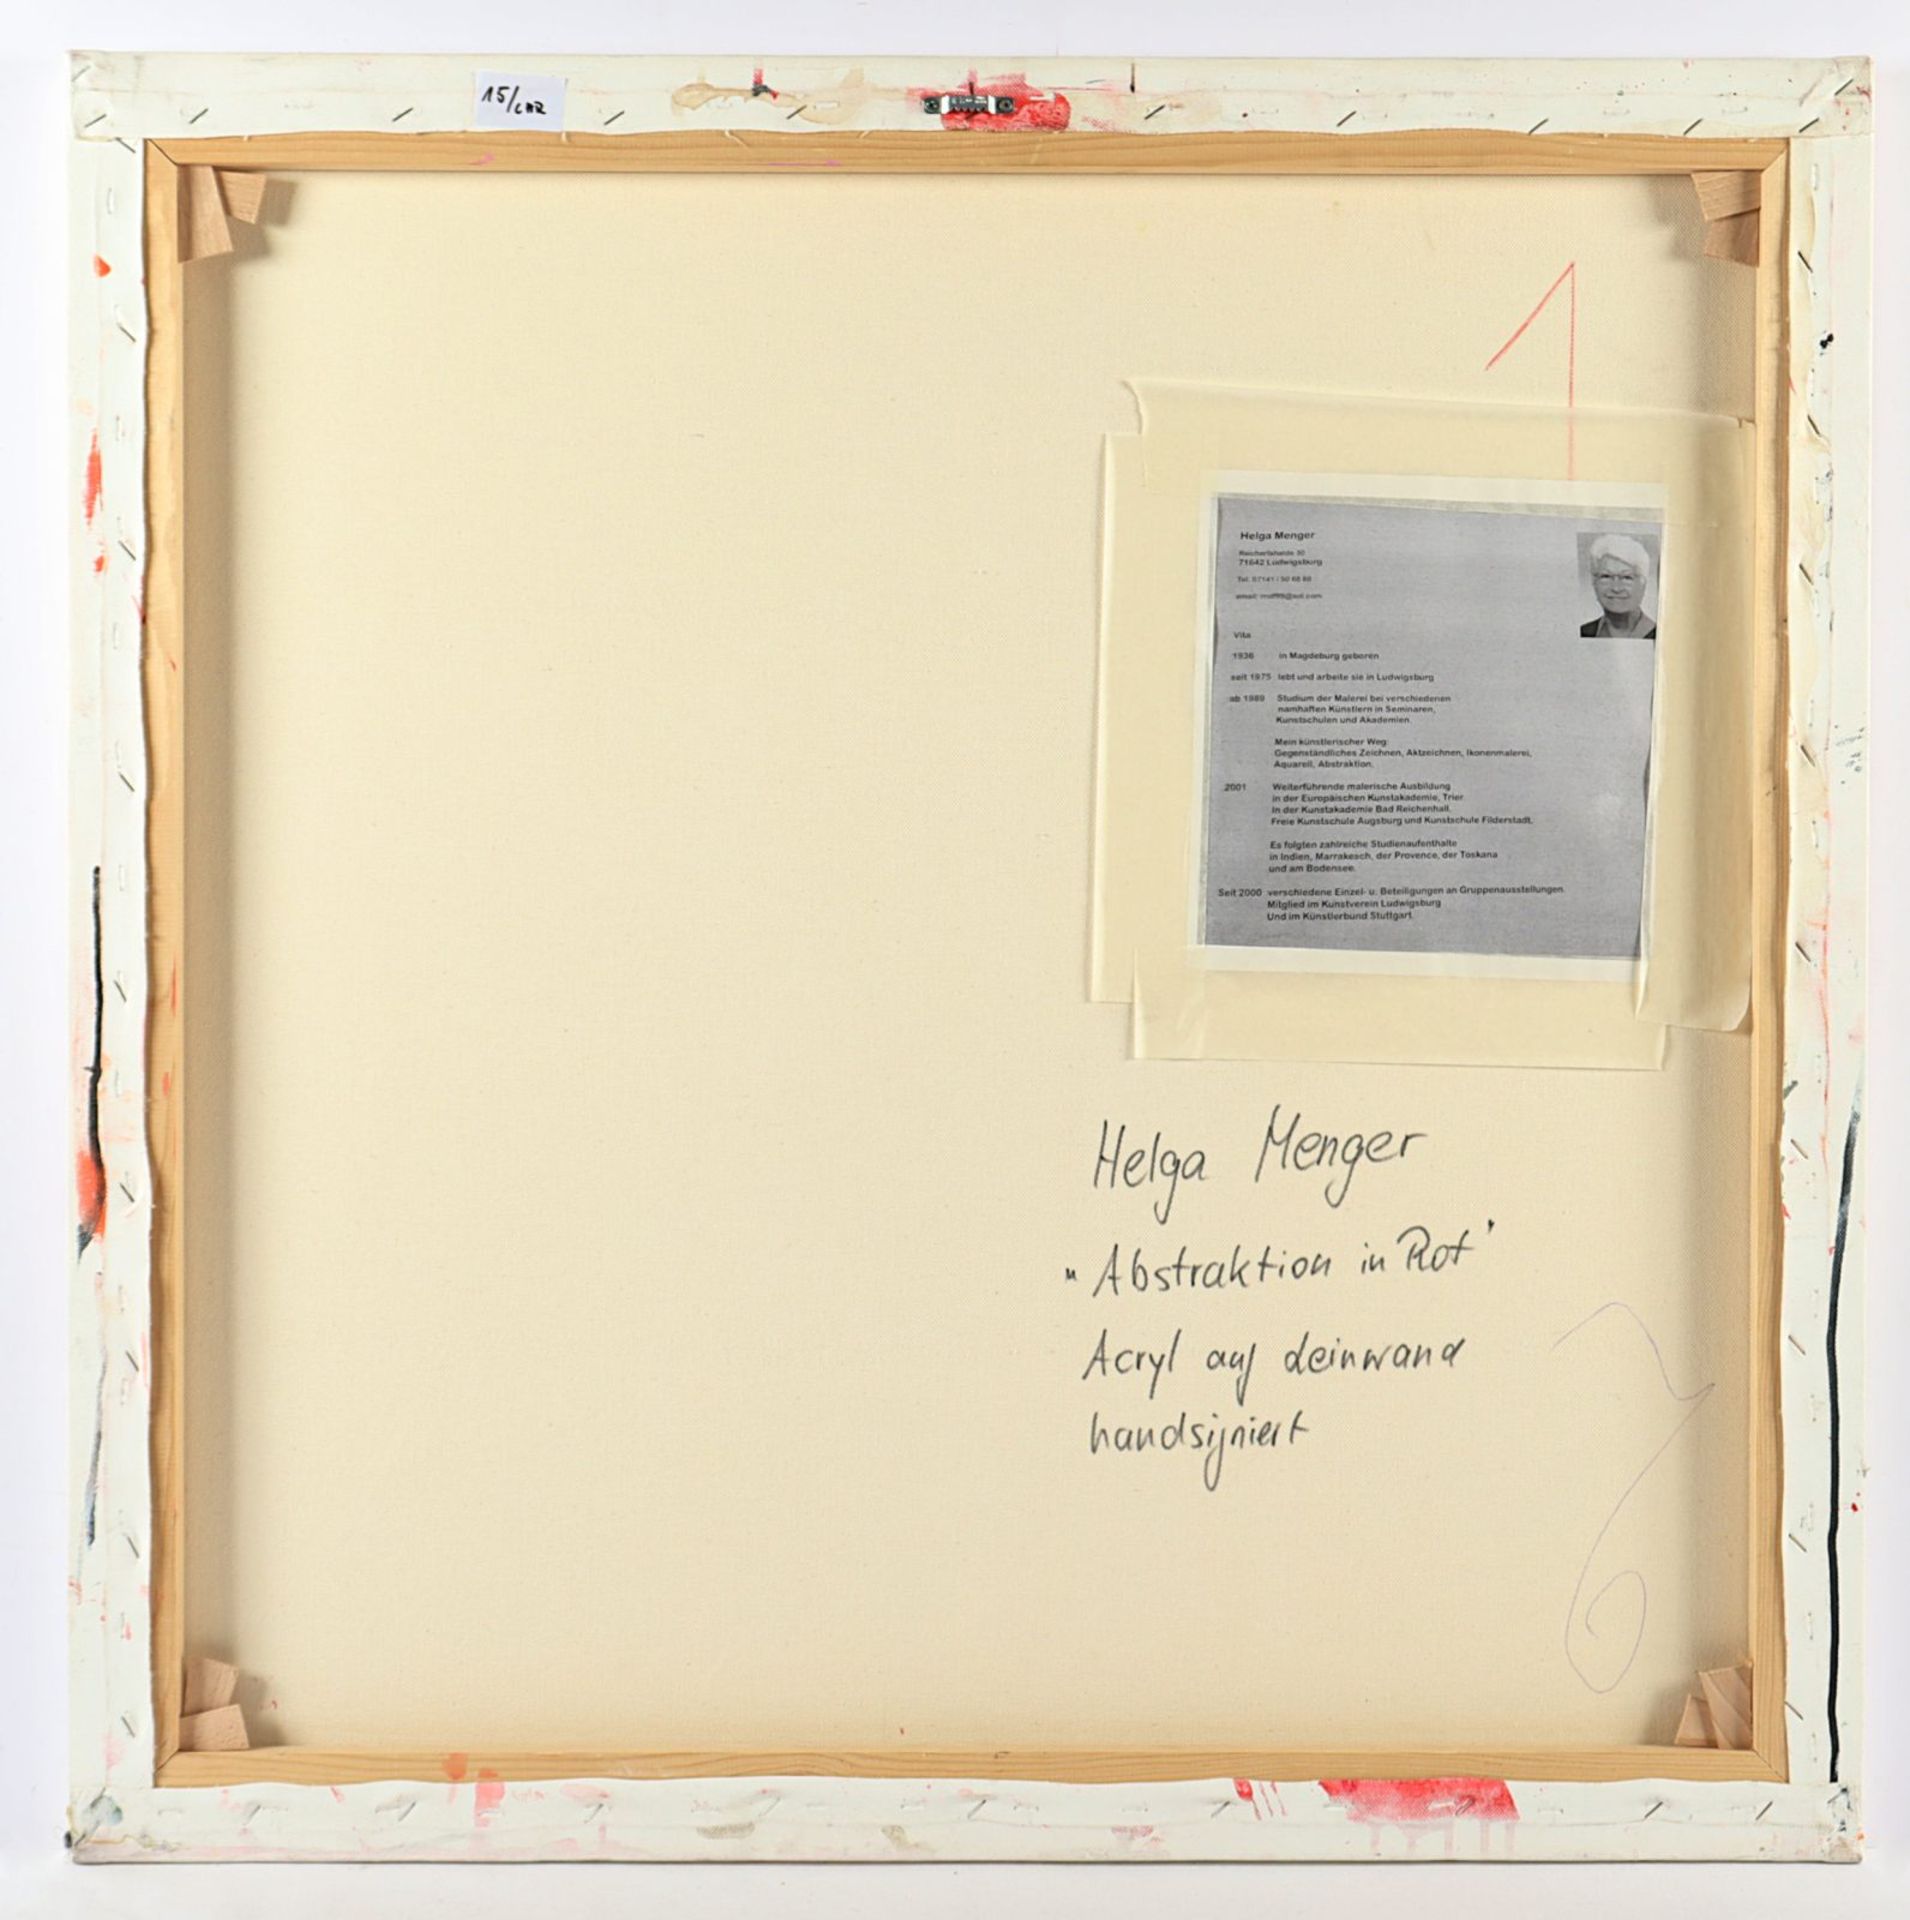 Menger, Helga, "o.T.", Acryl/Papier, 50 x 60, signiert, R. - Image 2 of 3